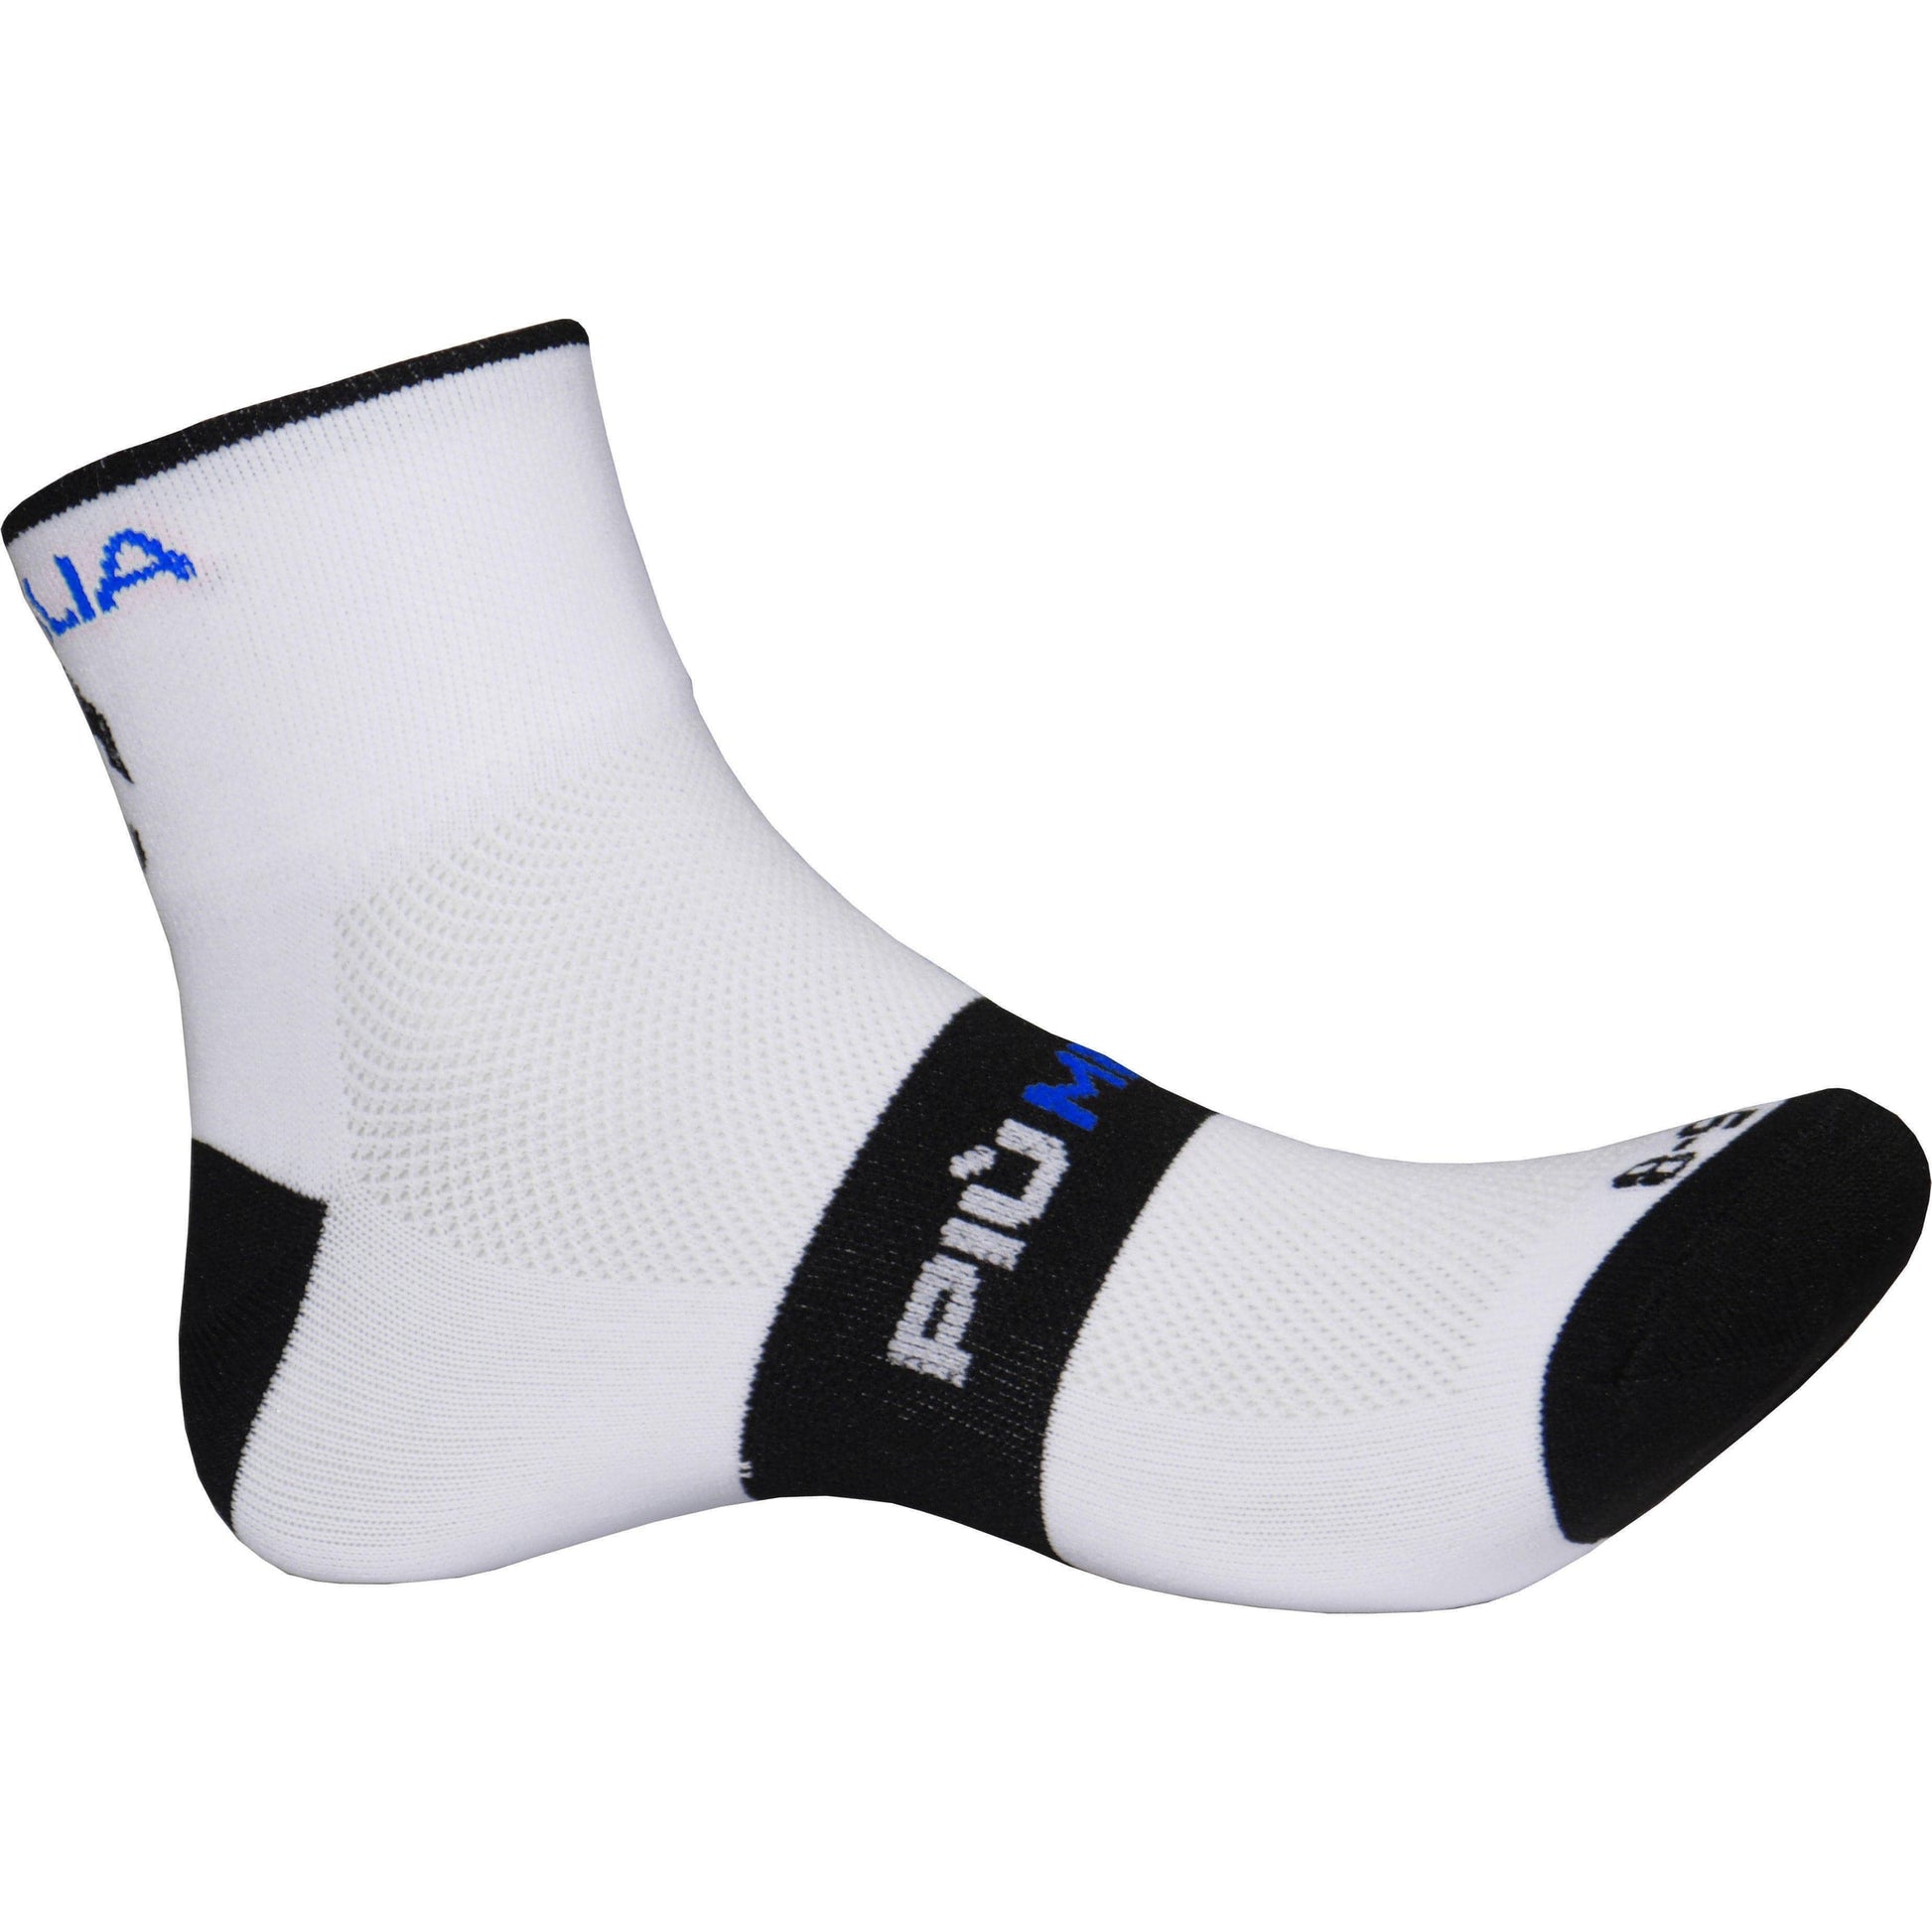 Piu Miglia Monza Cycling Socks - White 5055604342402 - Start Fitness